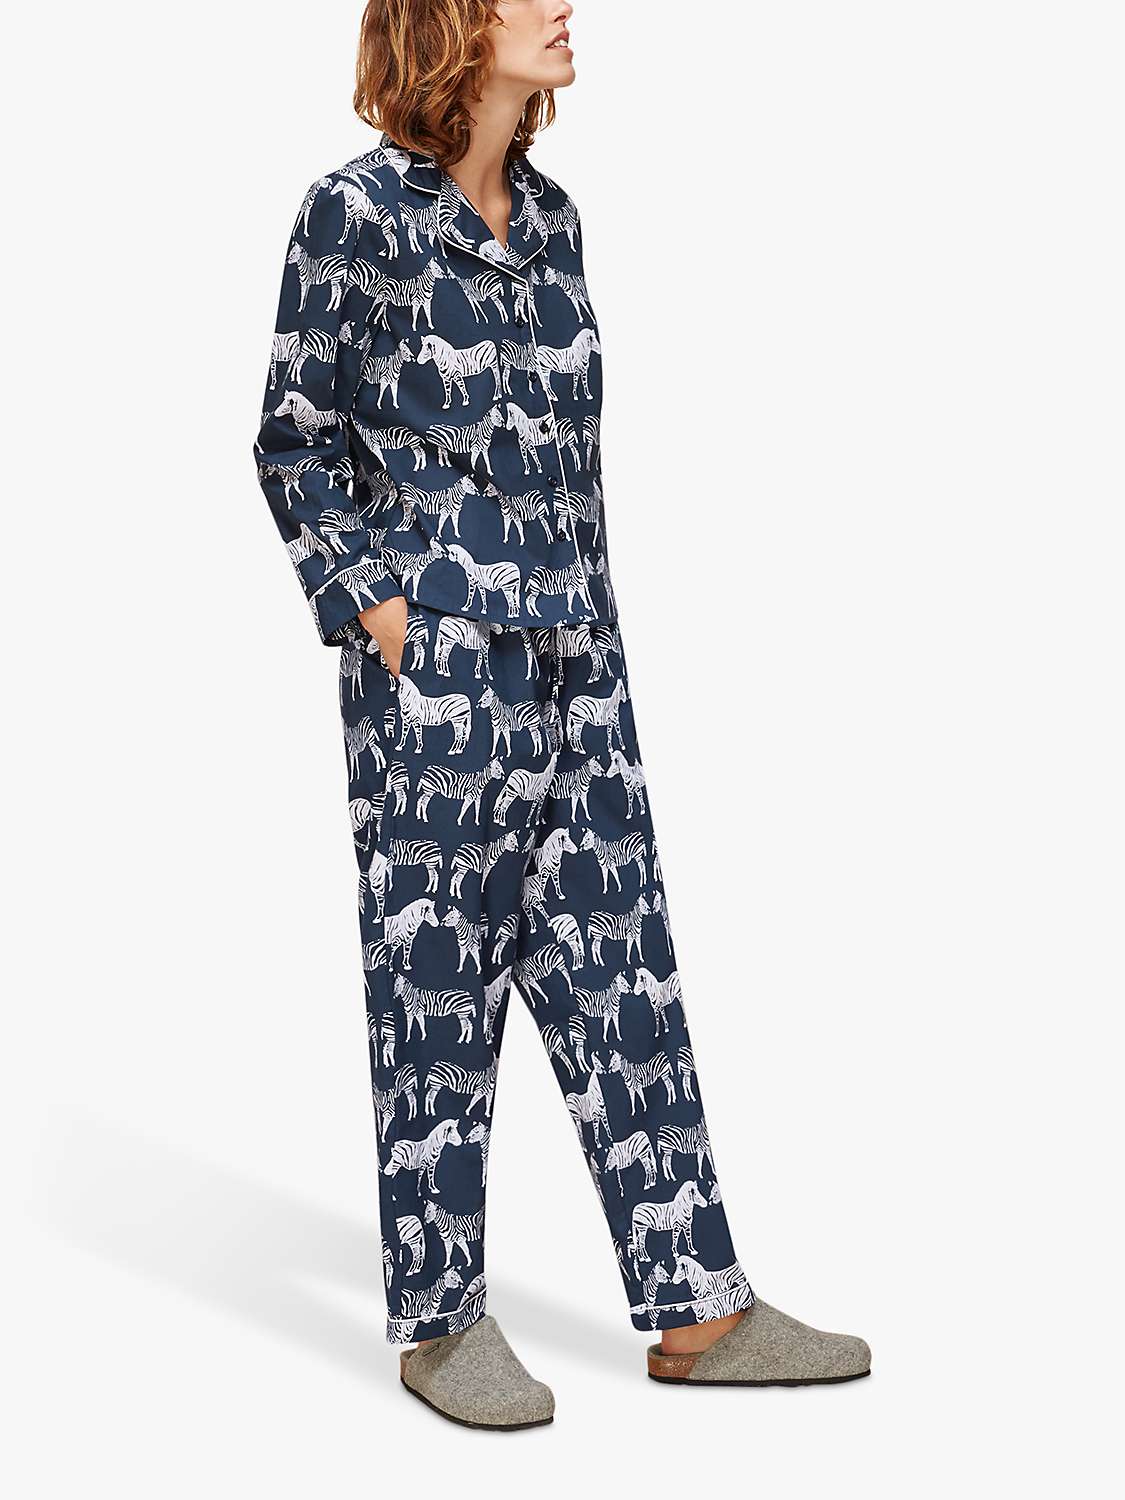 cadeau Feline print Pyjama Set cadeau voor haar Kleding Gender-neutrale kleding volwassenen Pyjamas & Badjassen Pyjama PJ's Pyjama Set For Women Classic Tiger print Animal's print 6 maten XS tot 2XL 